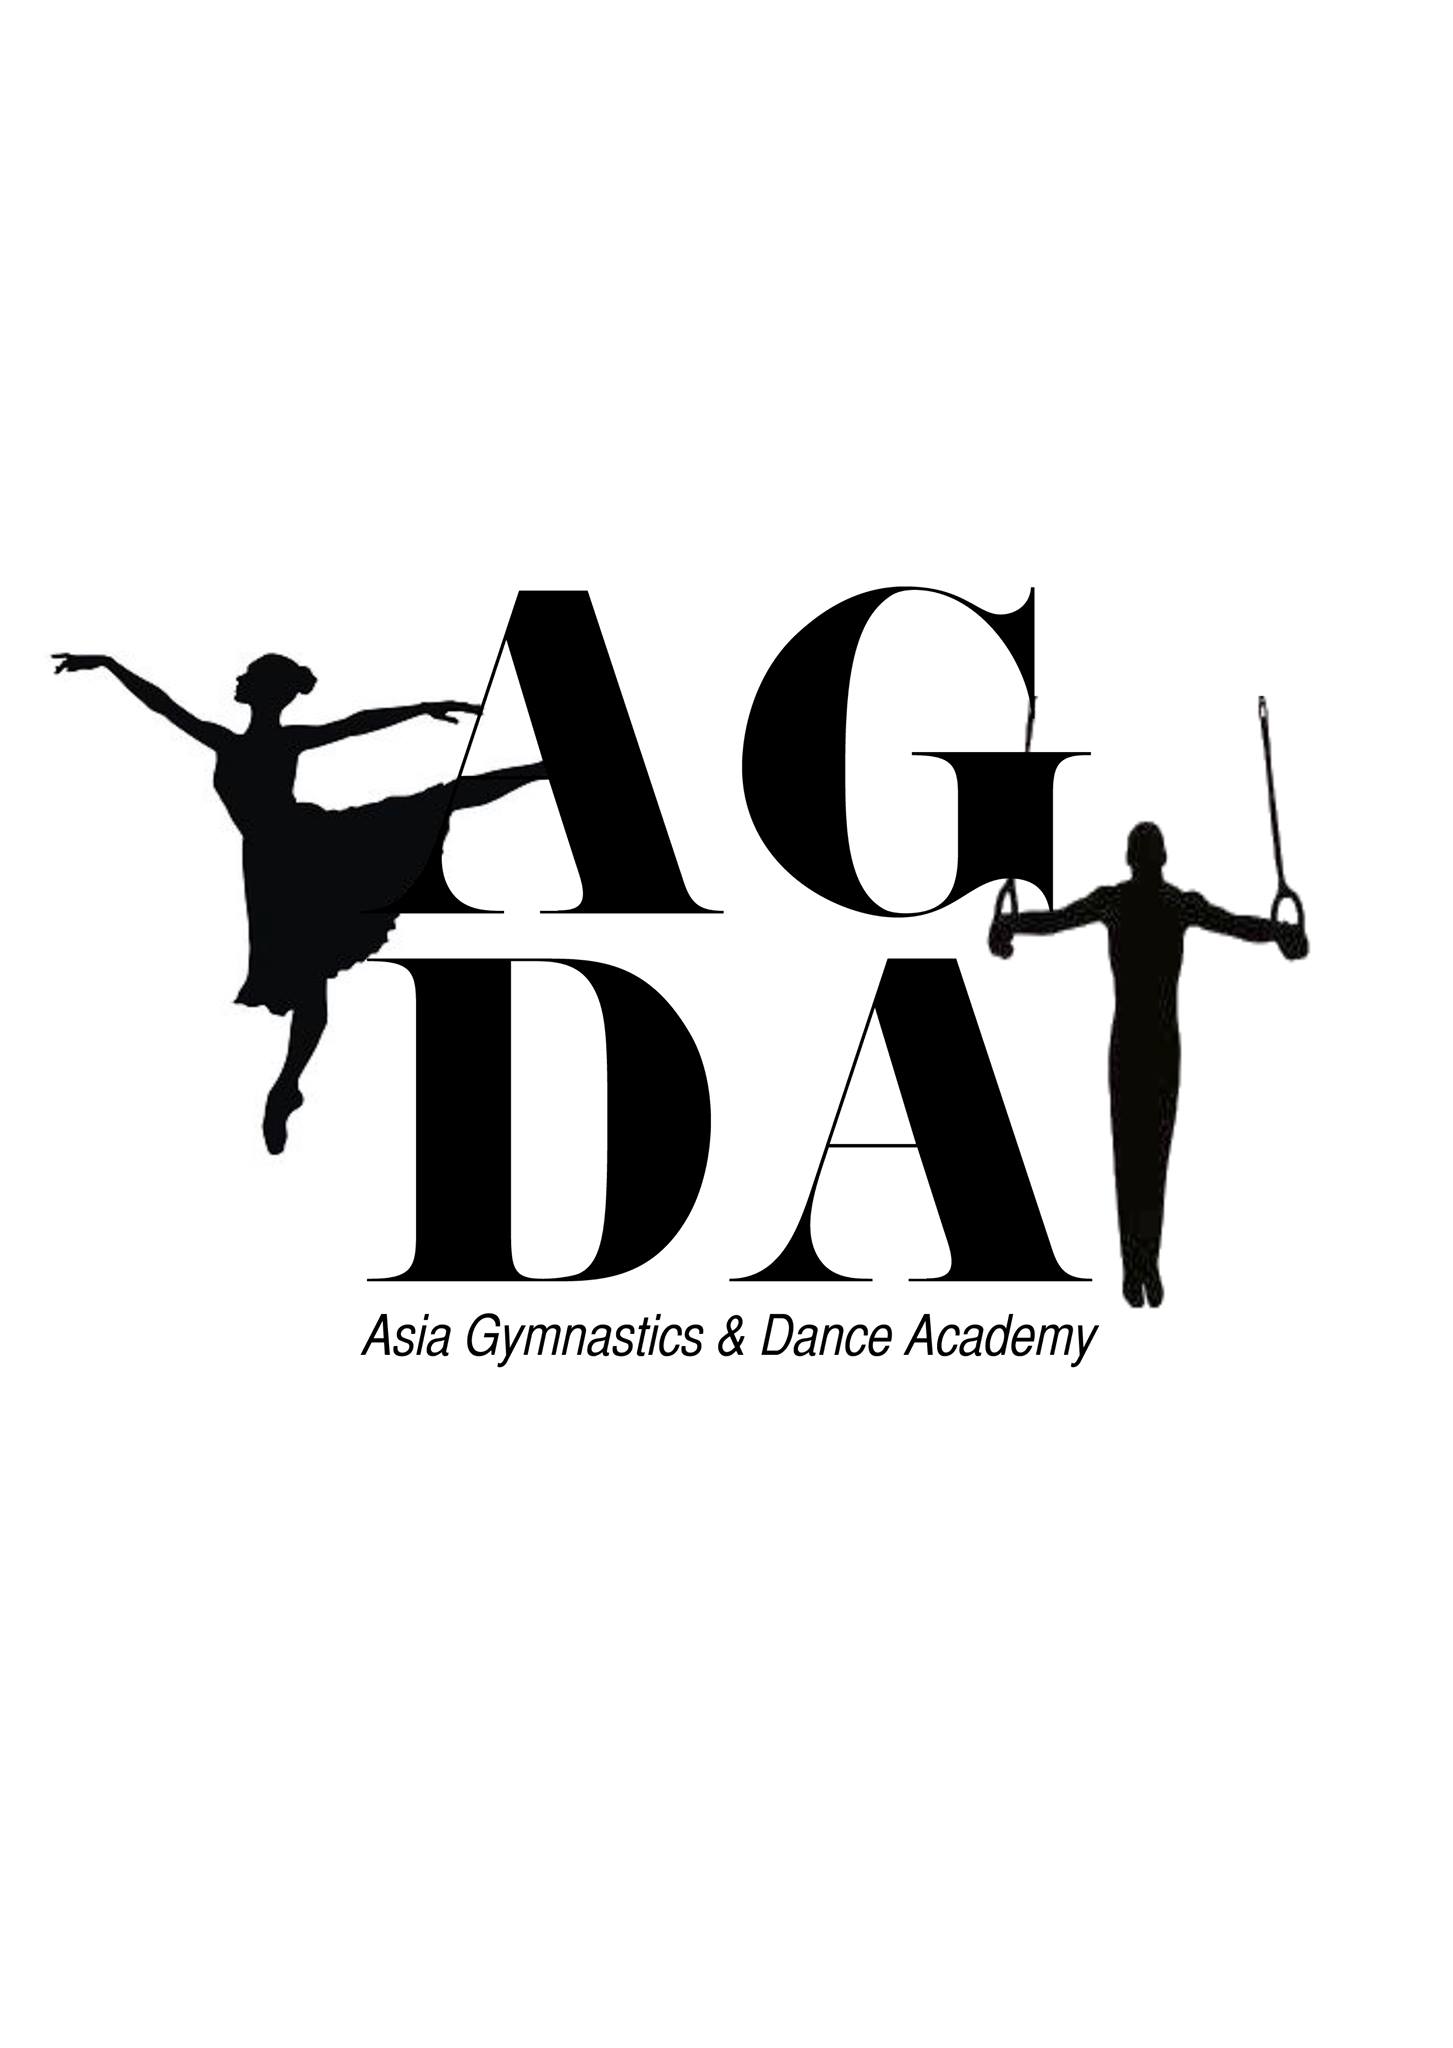 Asia Gymnastics & Dance Academy